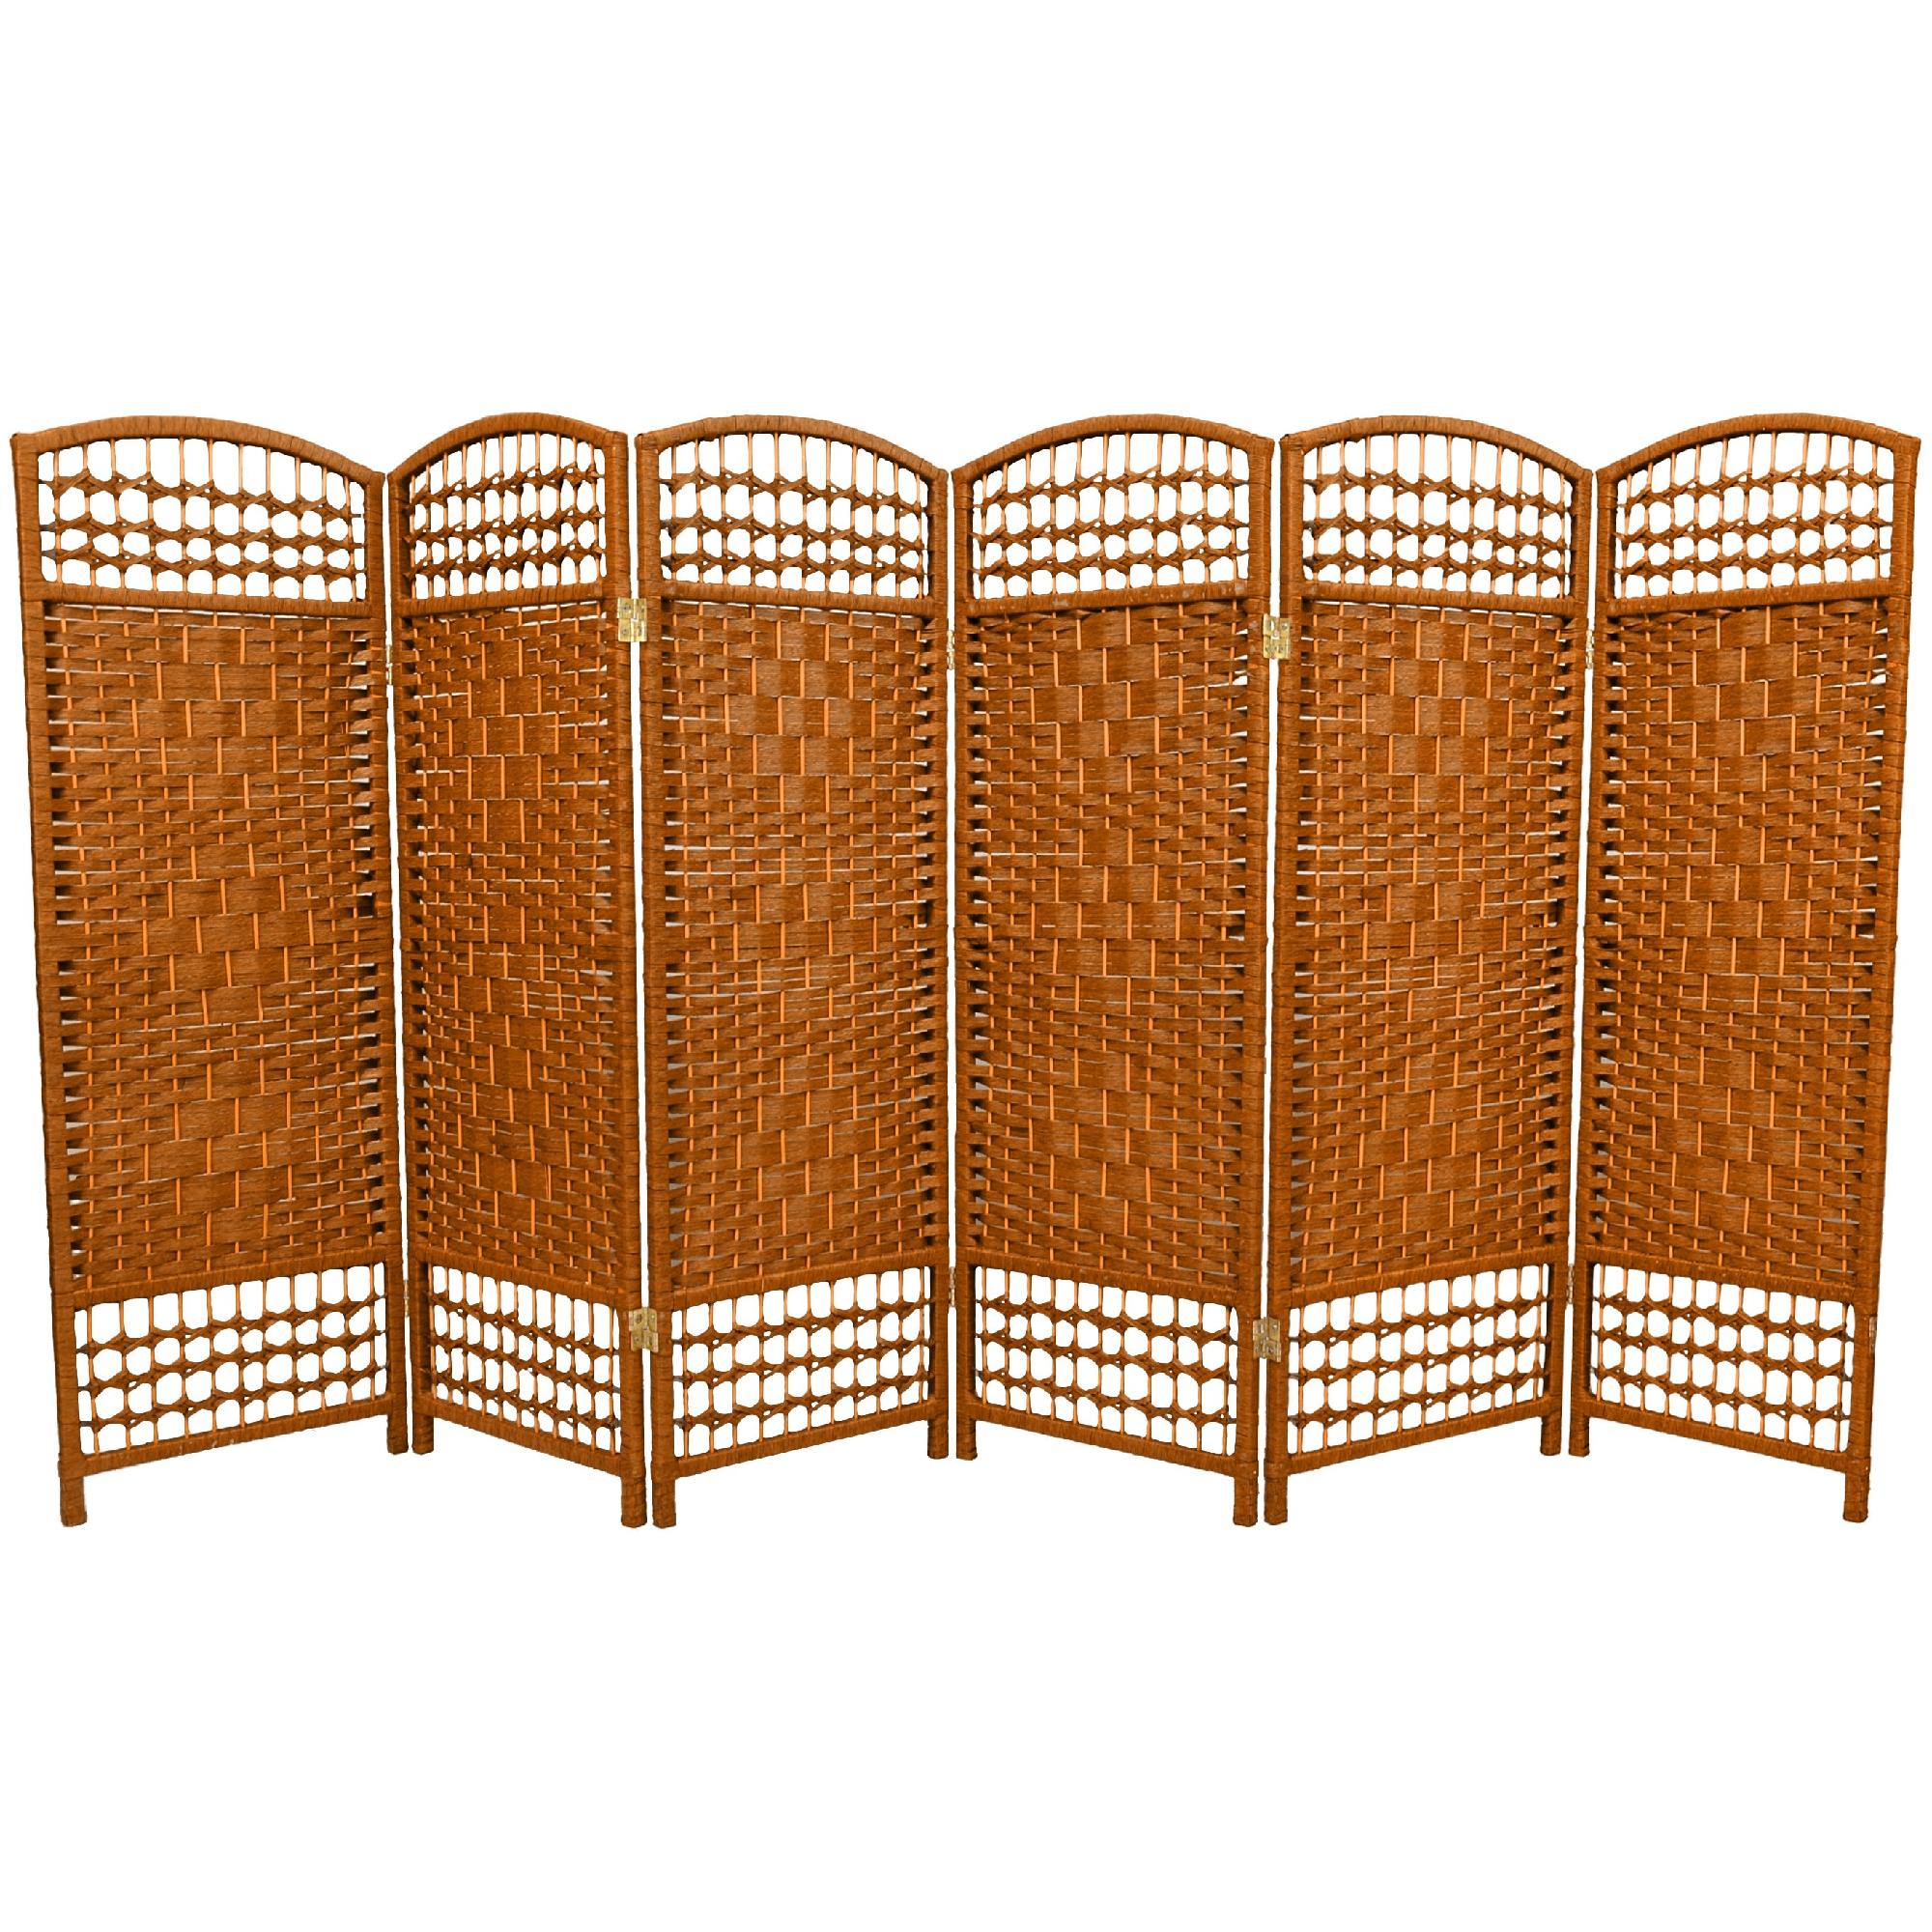 Oriental Furniture 4 ft. Tall Fiber Weave Room Divider - 6 Panel - Dark Beige